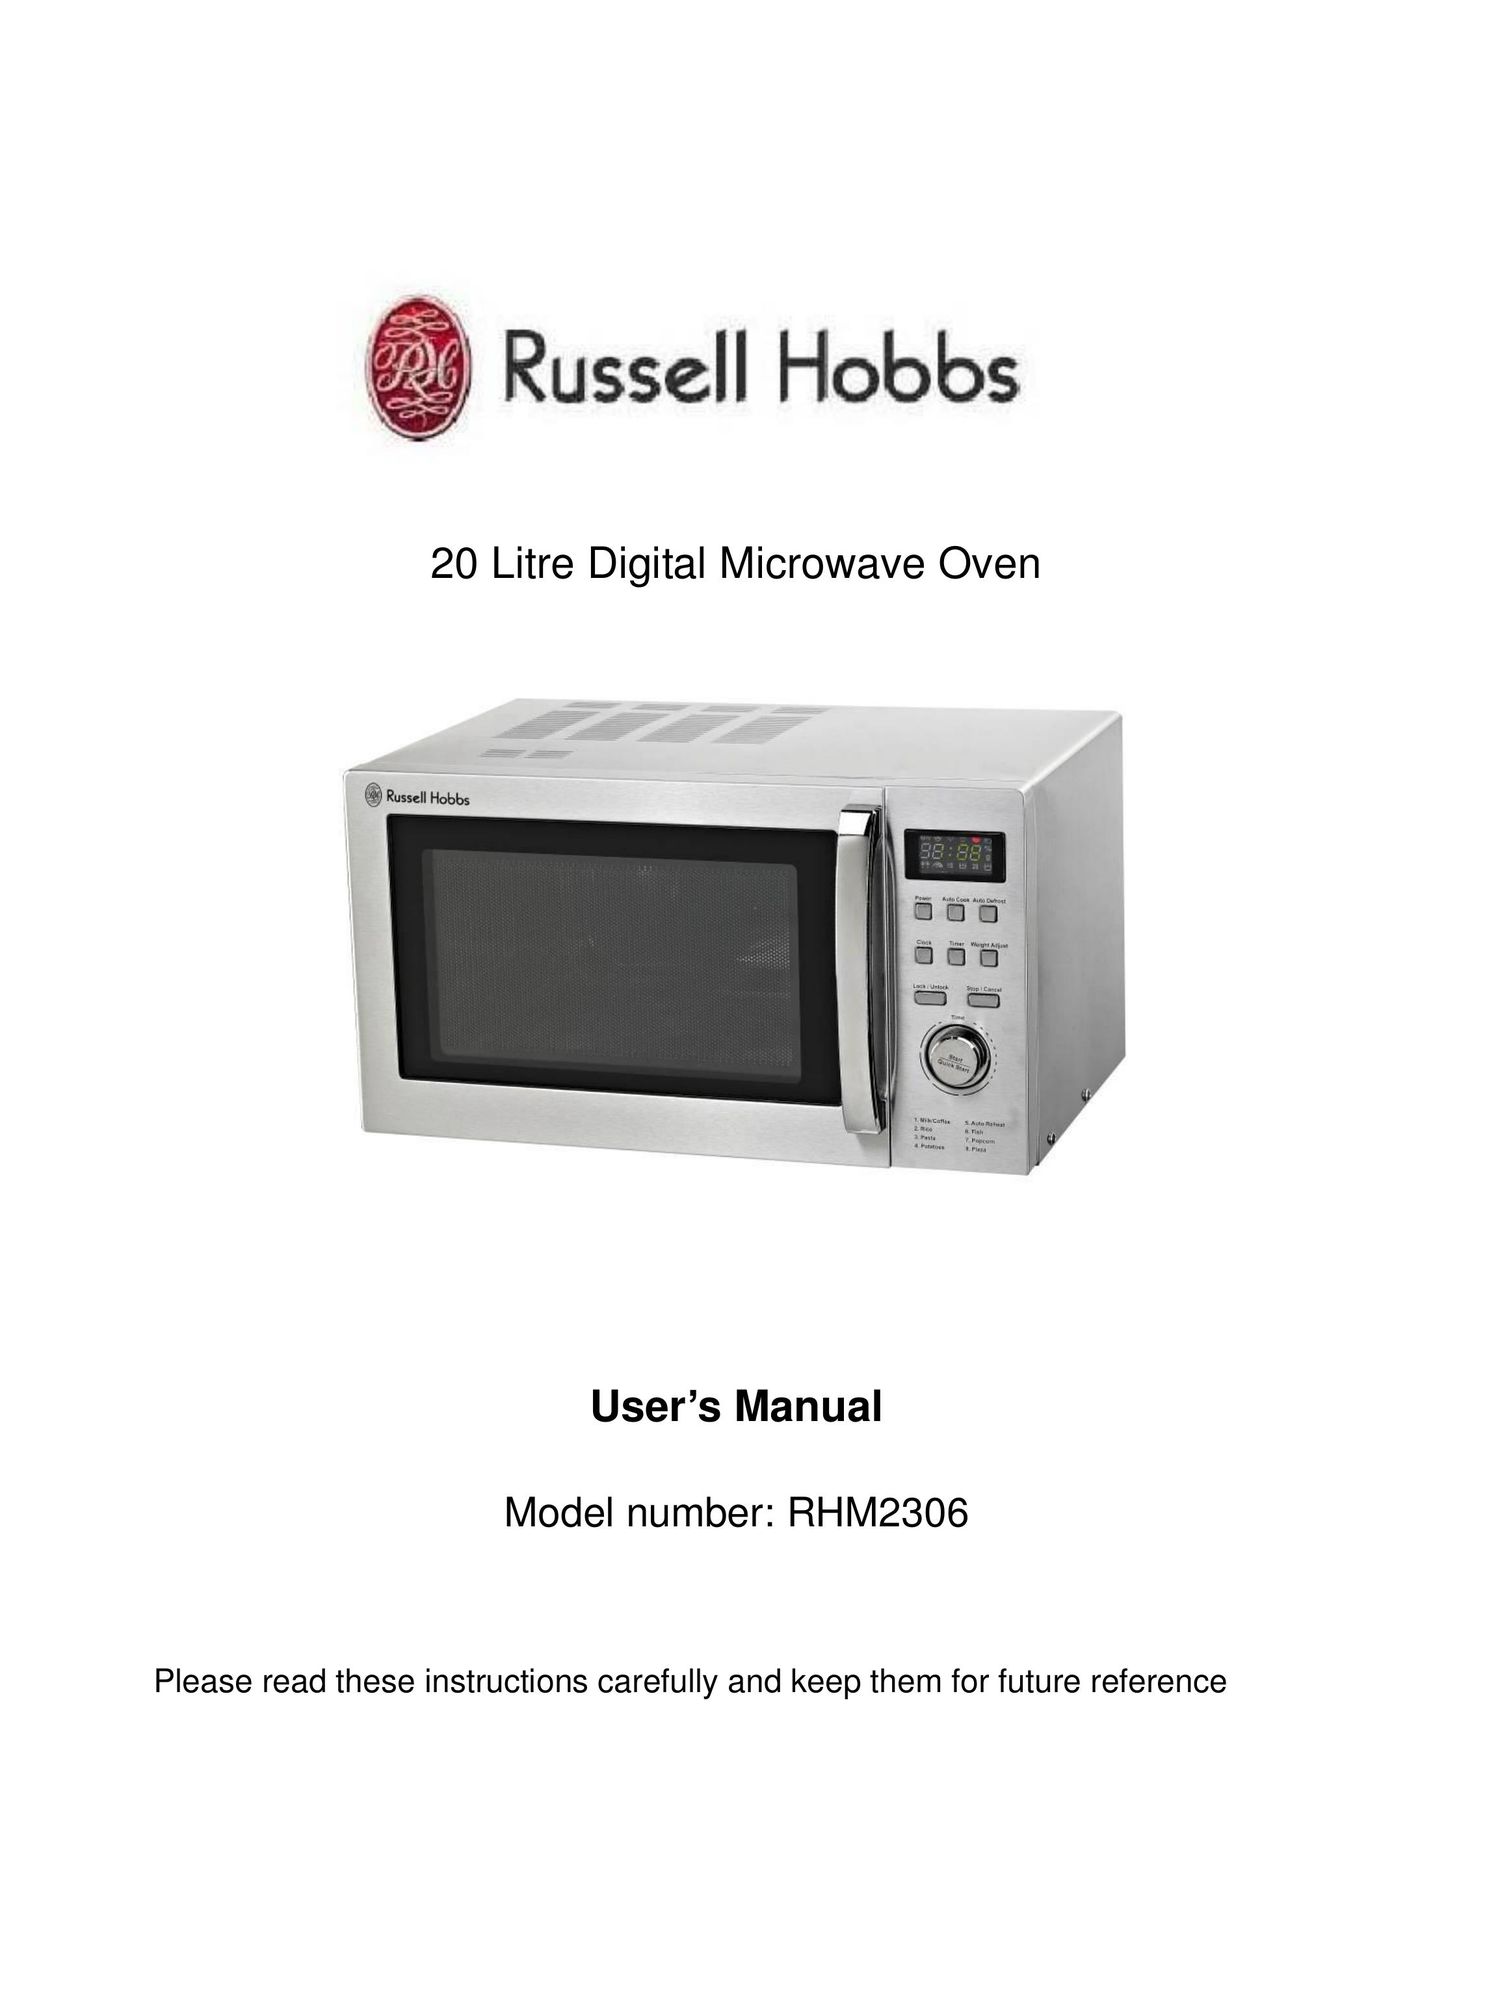 Russell Hobbs RHM2306 Microwave Oven User Manual